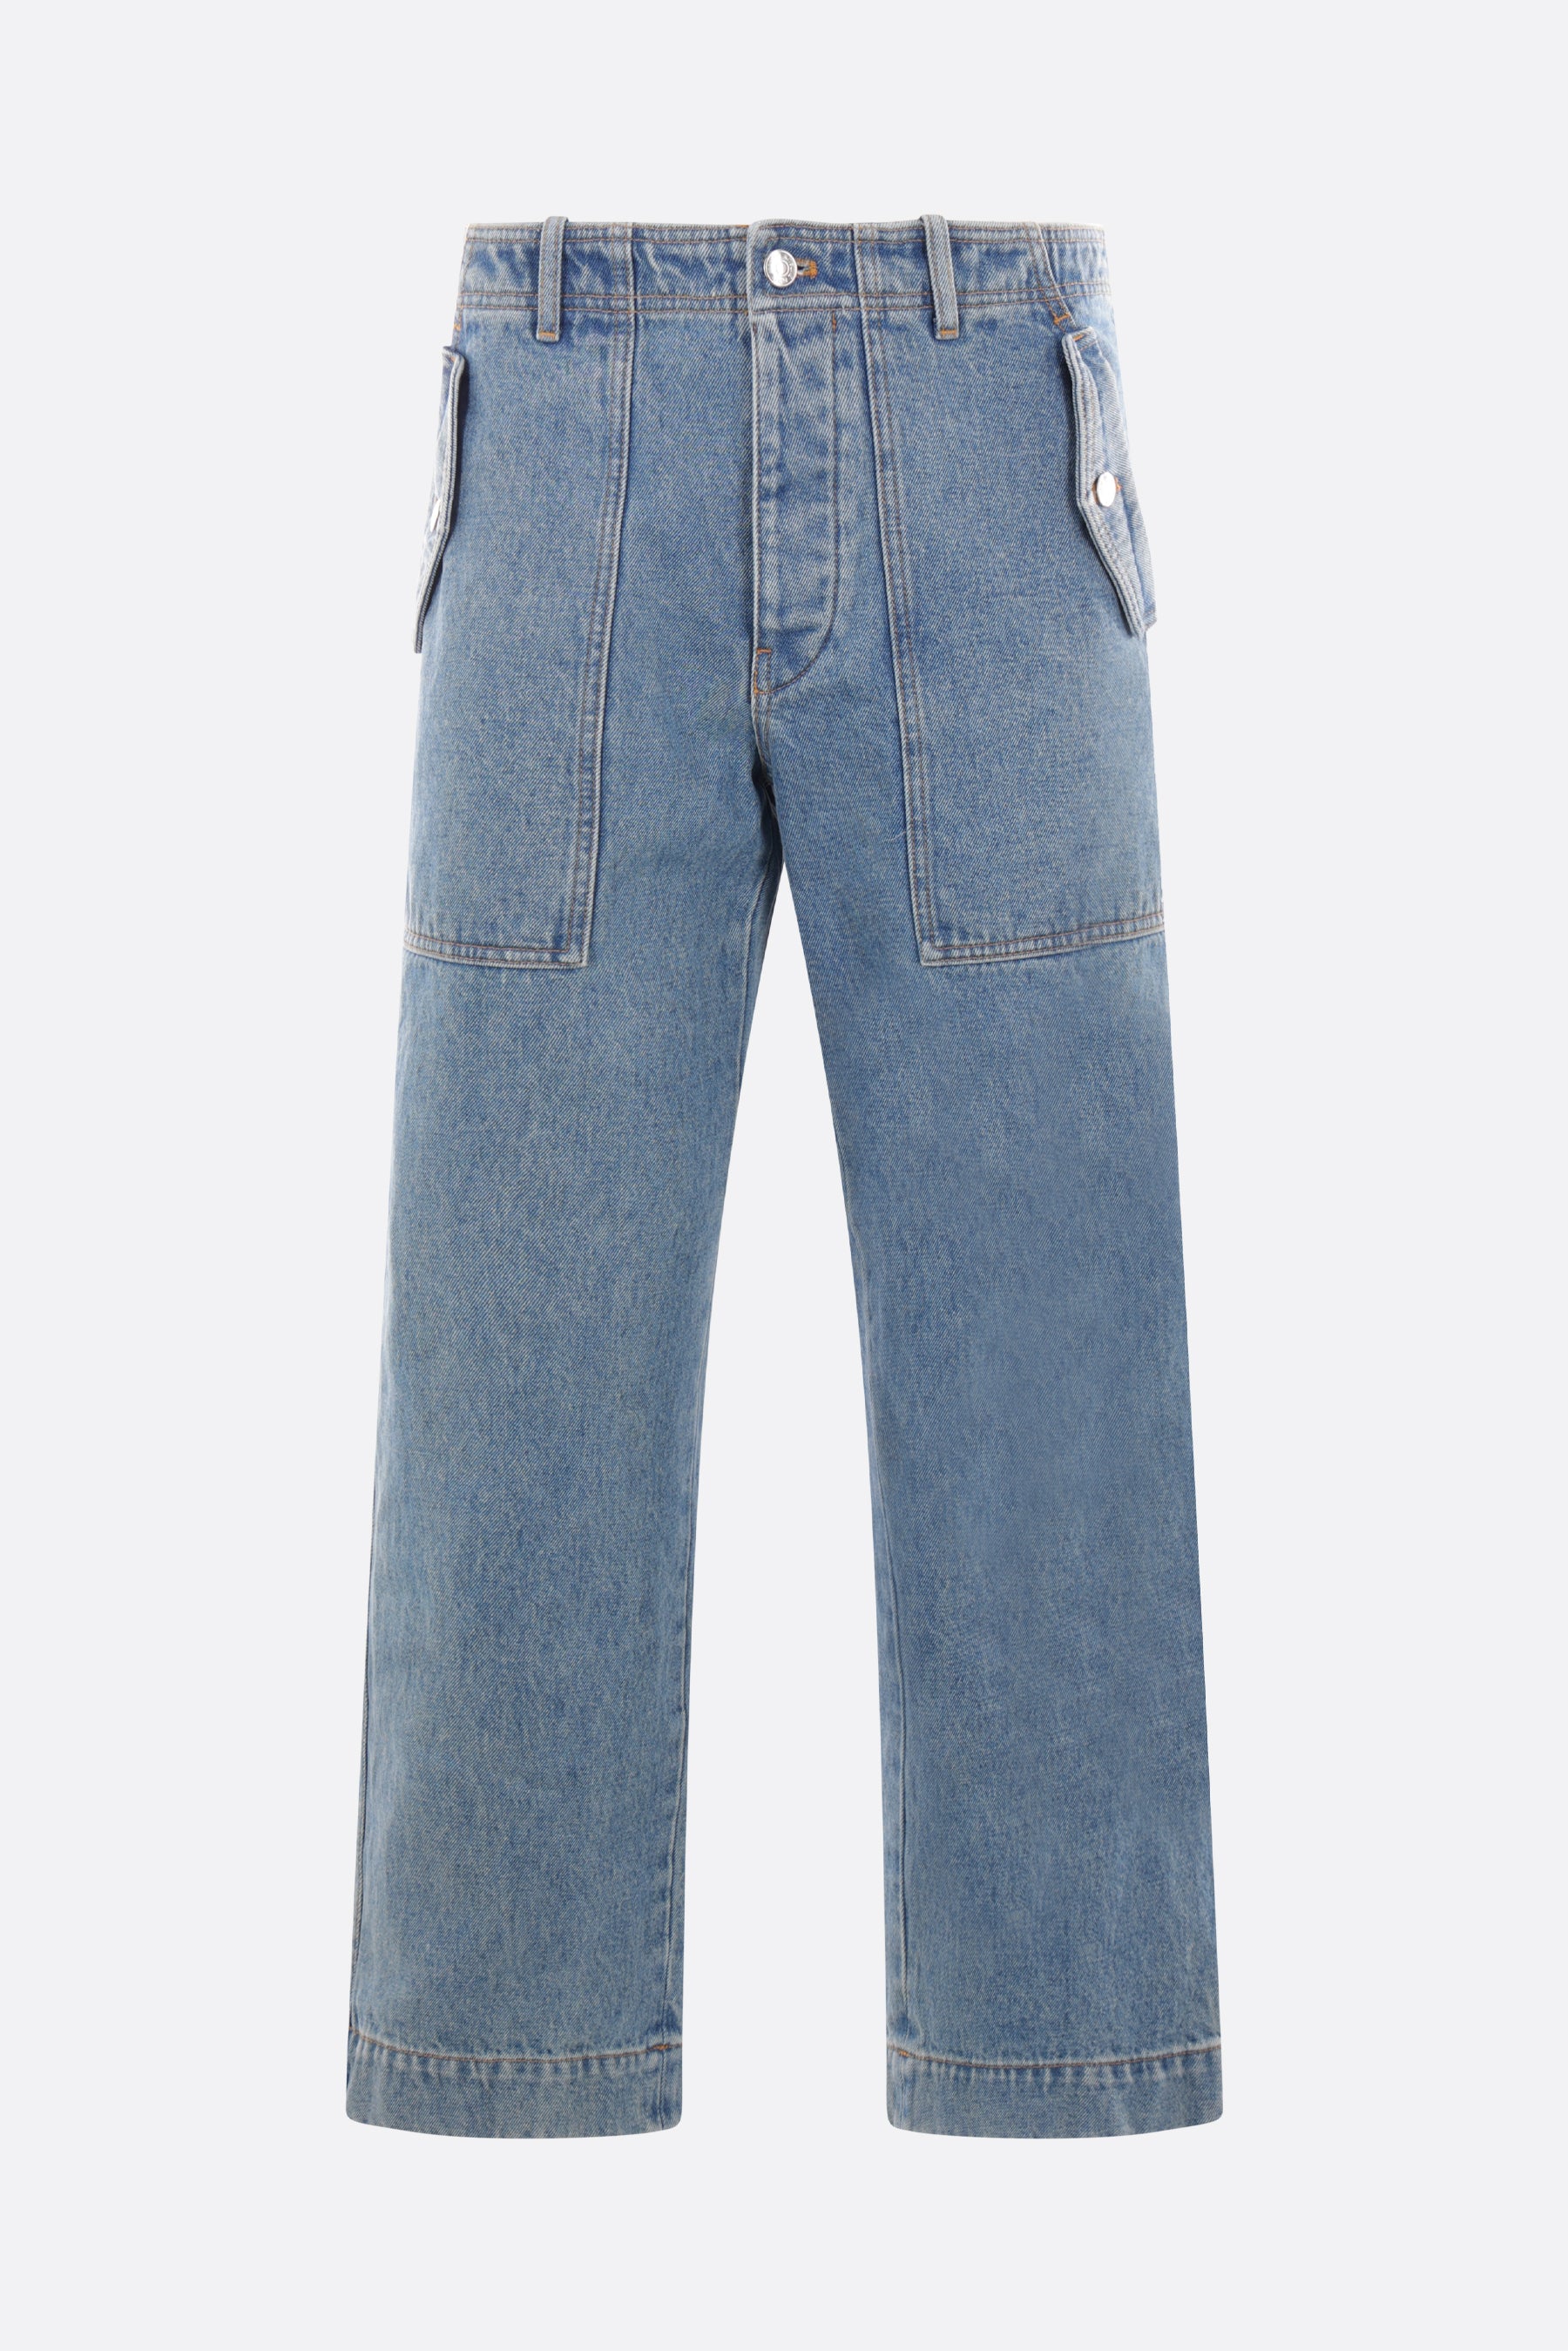 jeans workwear in denim